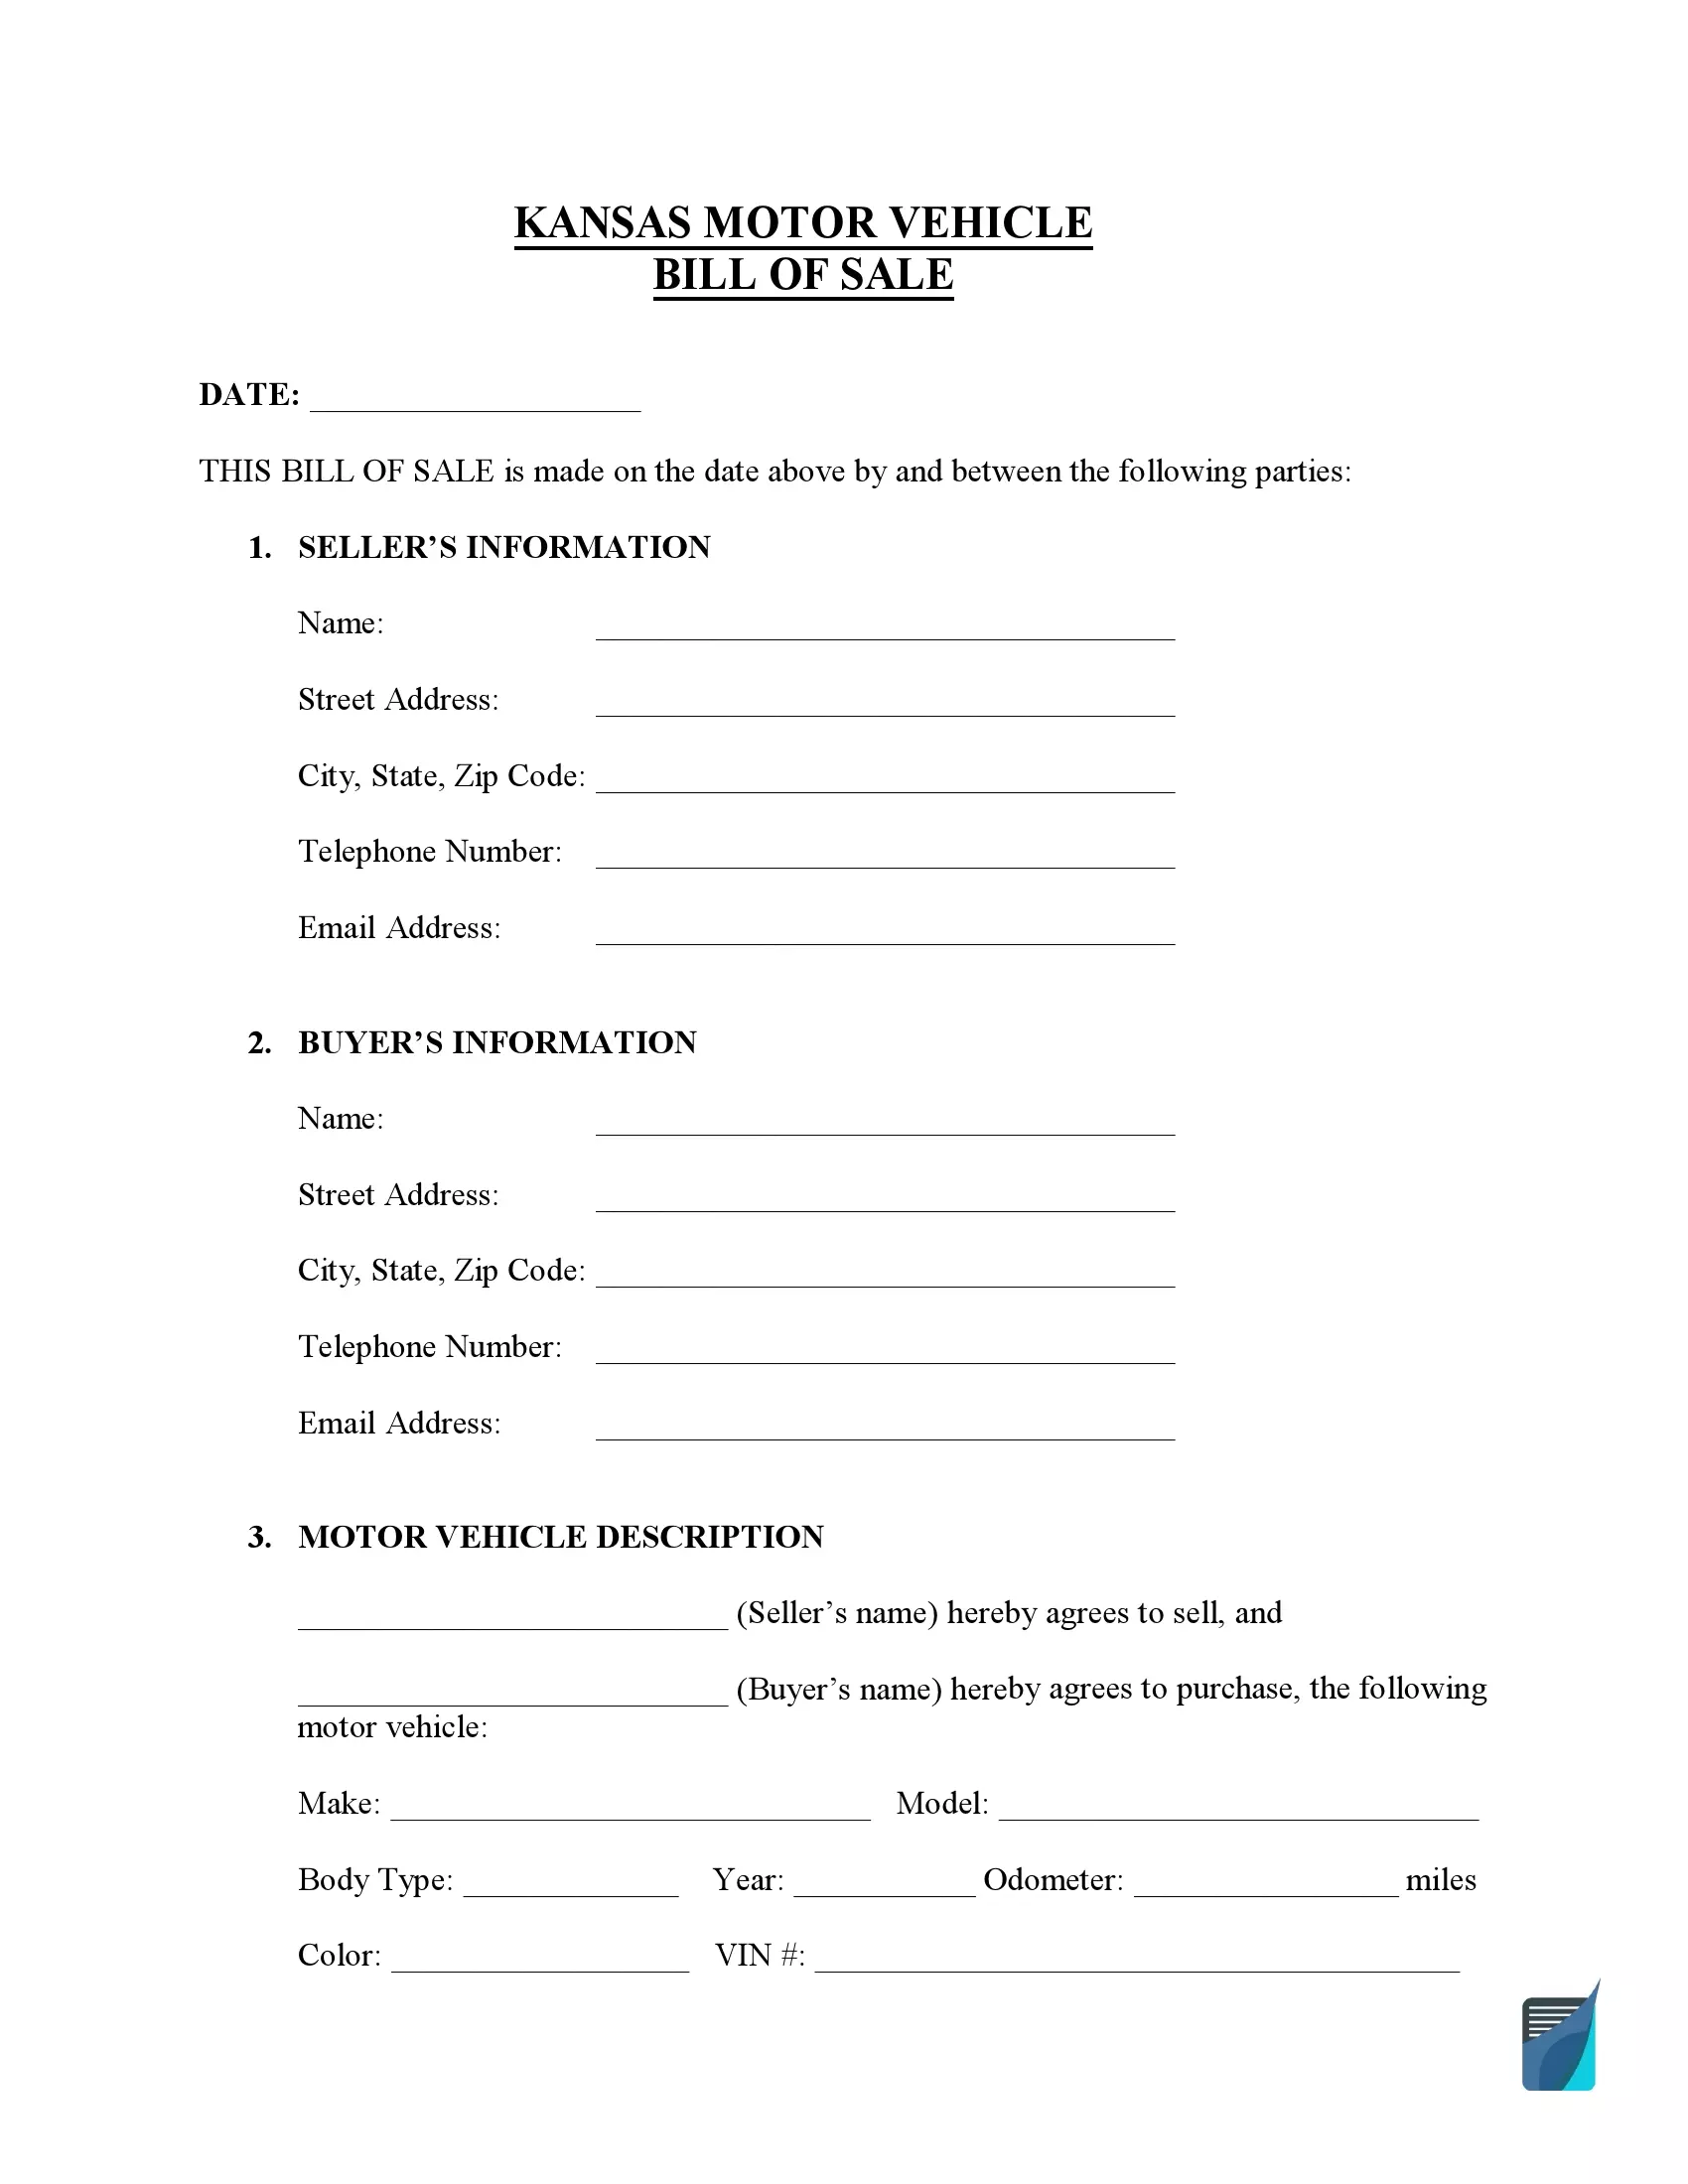 Kansas motor vehicle bill of sale template